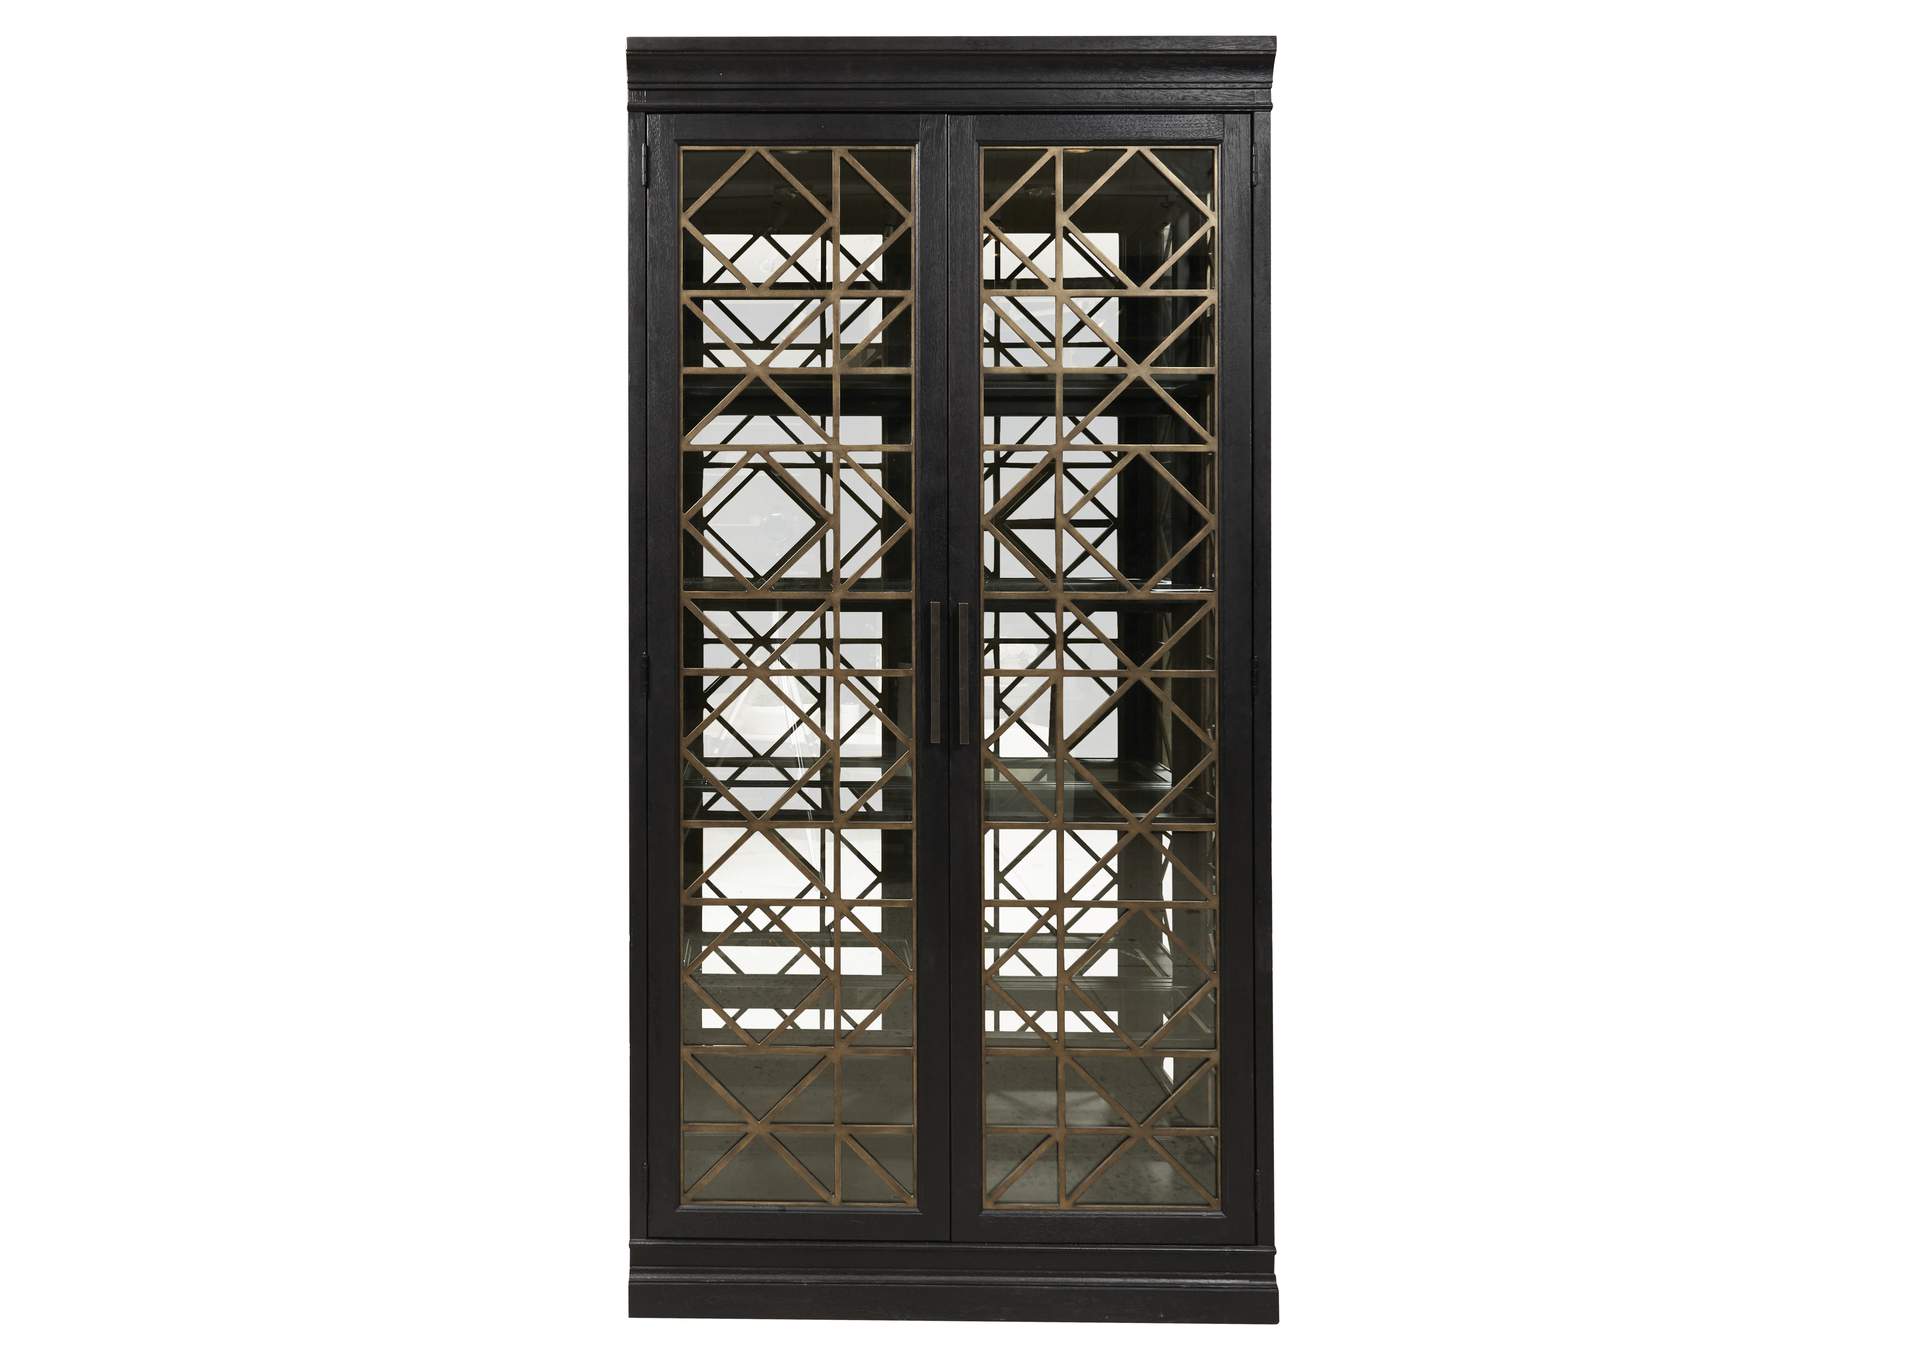 4 Shelf Display Cabinet with Decorative Glass Doors,Pulaski Furniture